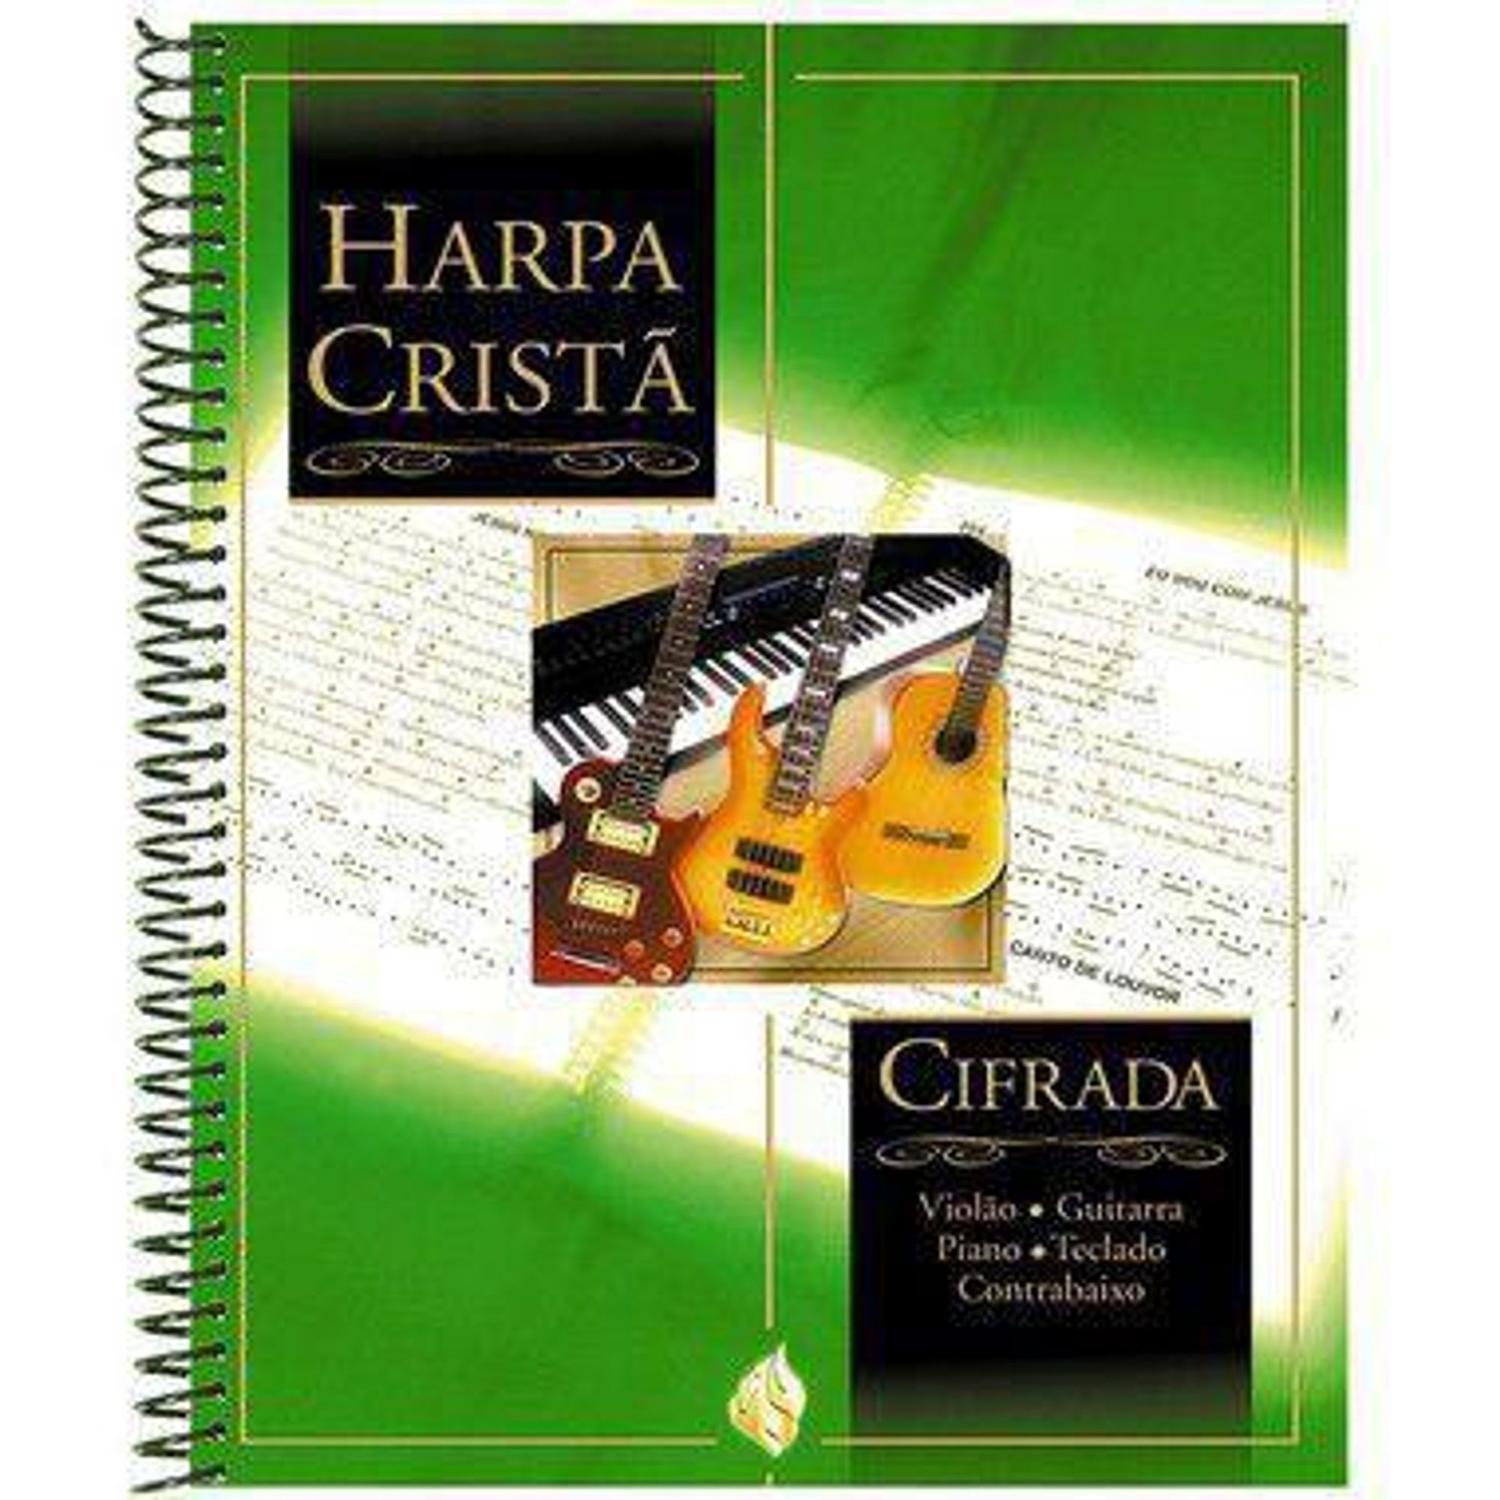 Harpa Cristã Cifrada - CPAD | Magalu Empresas | B2B e compras com CNPJ